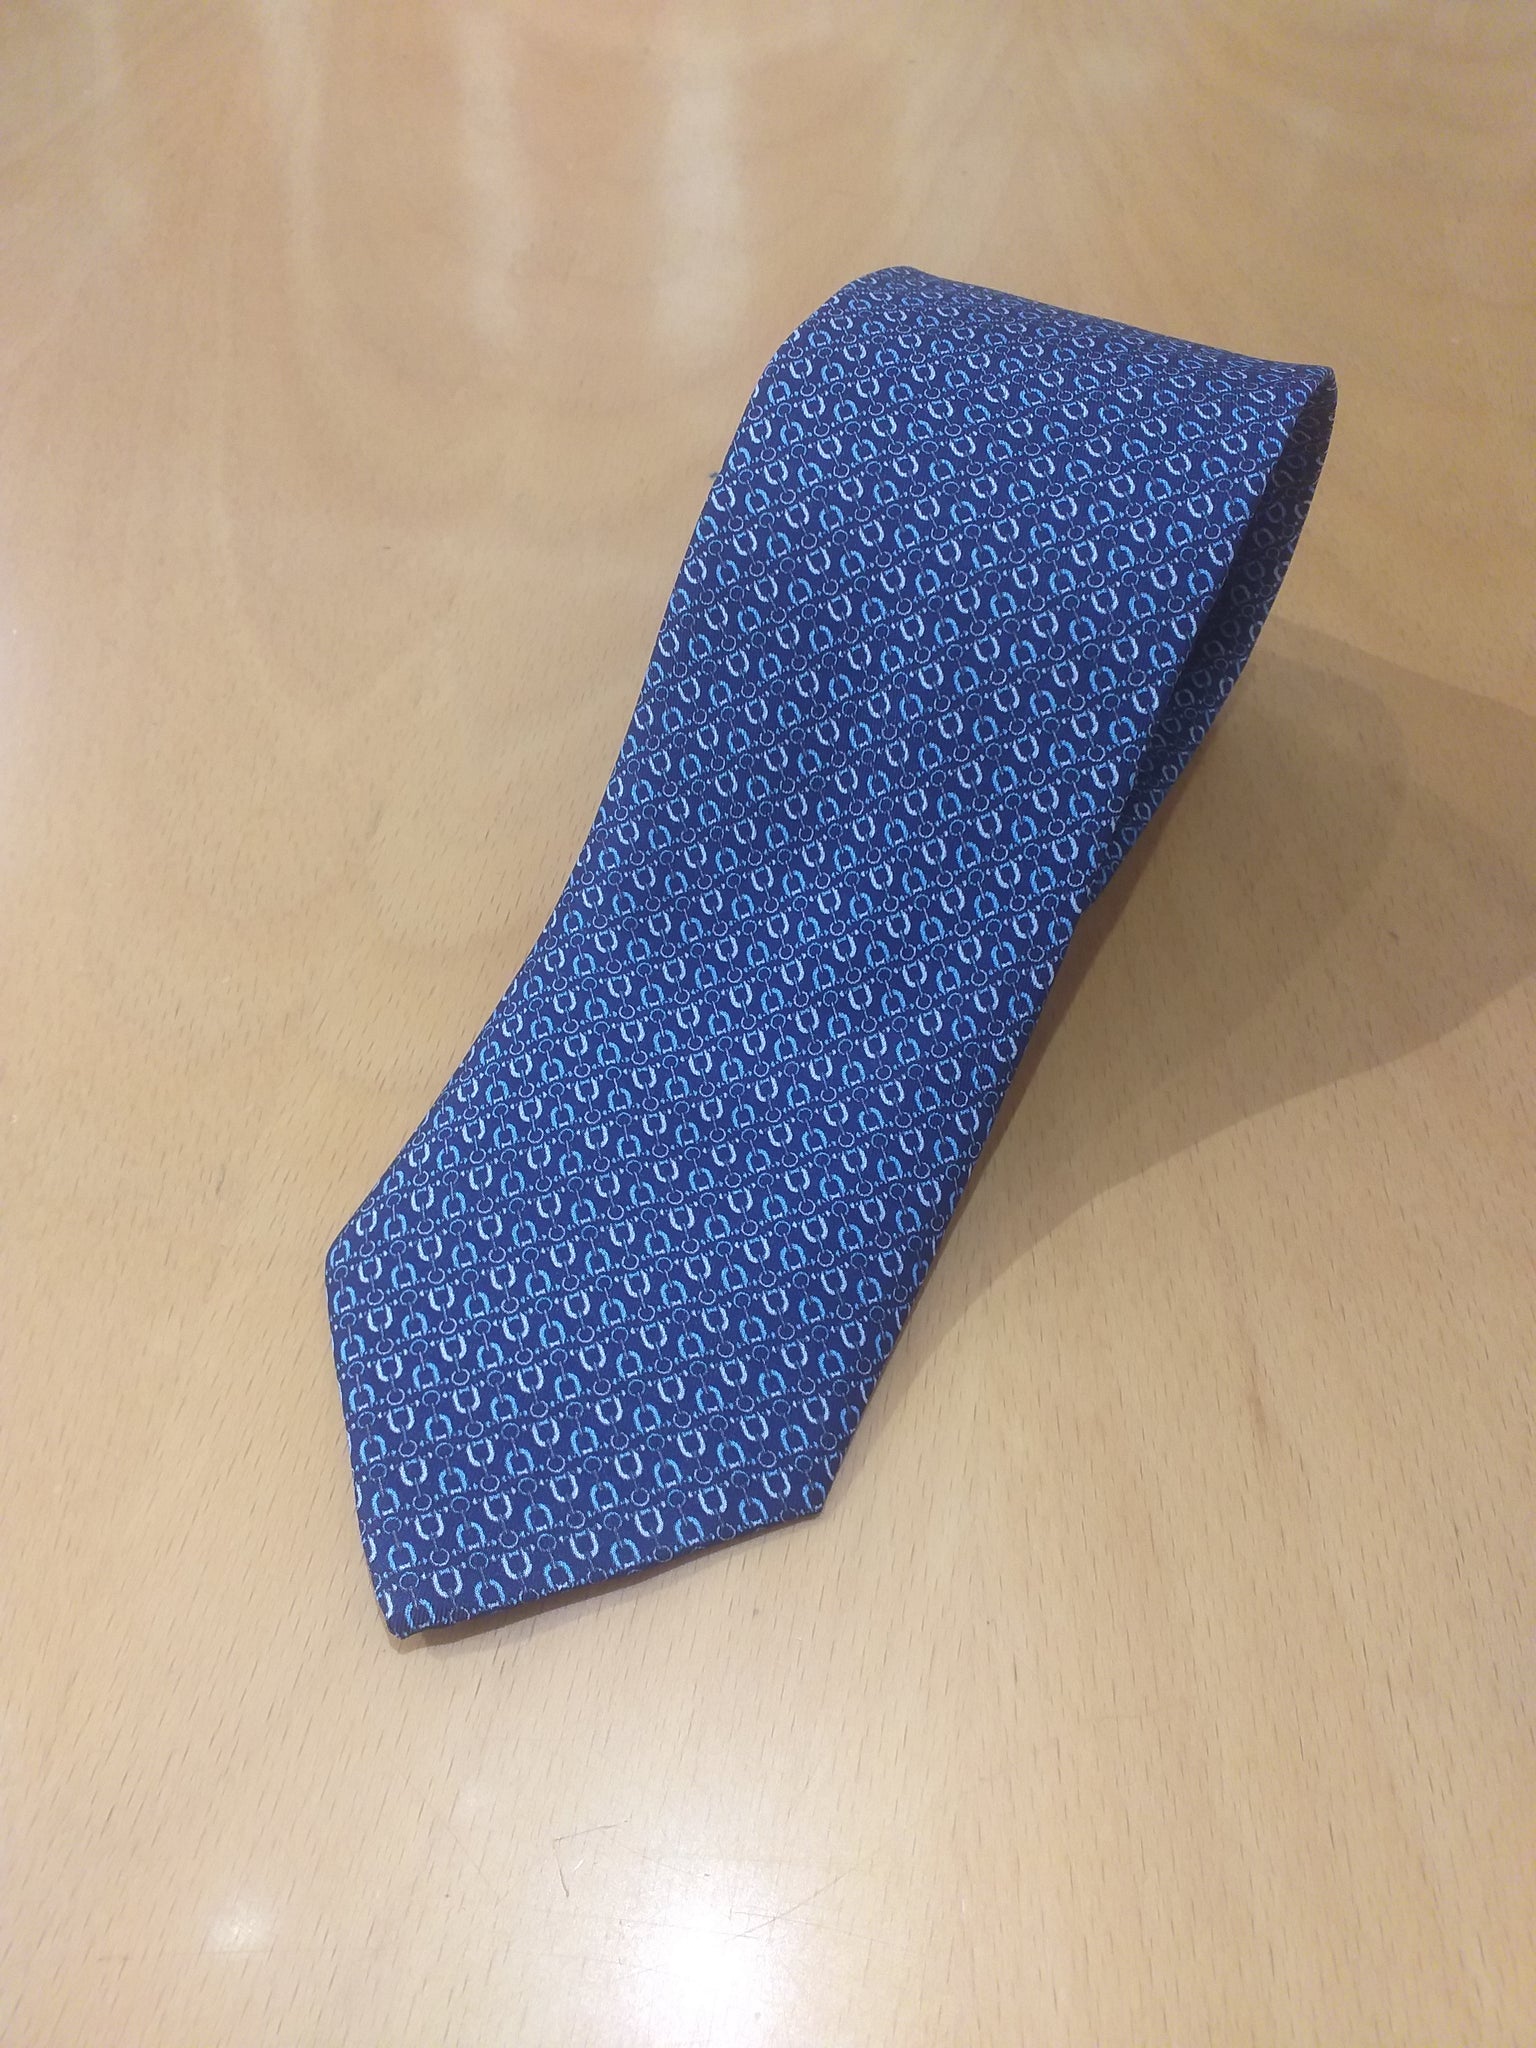 Cravatta ferro di cavallo (tie with horseshoe motif )